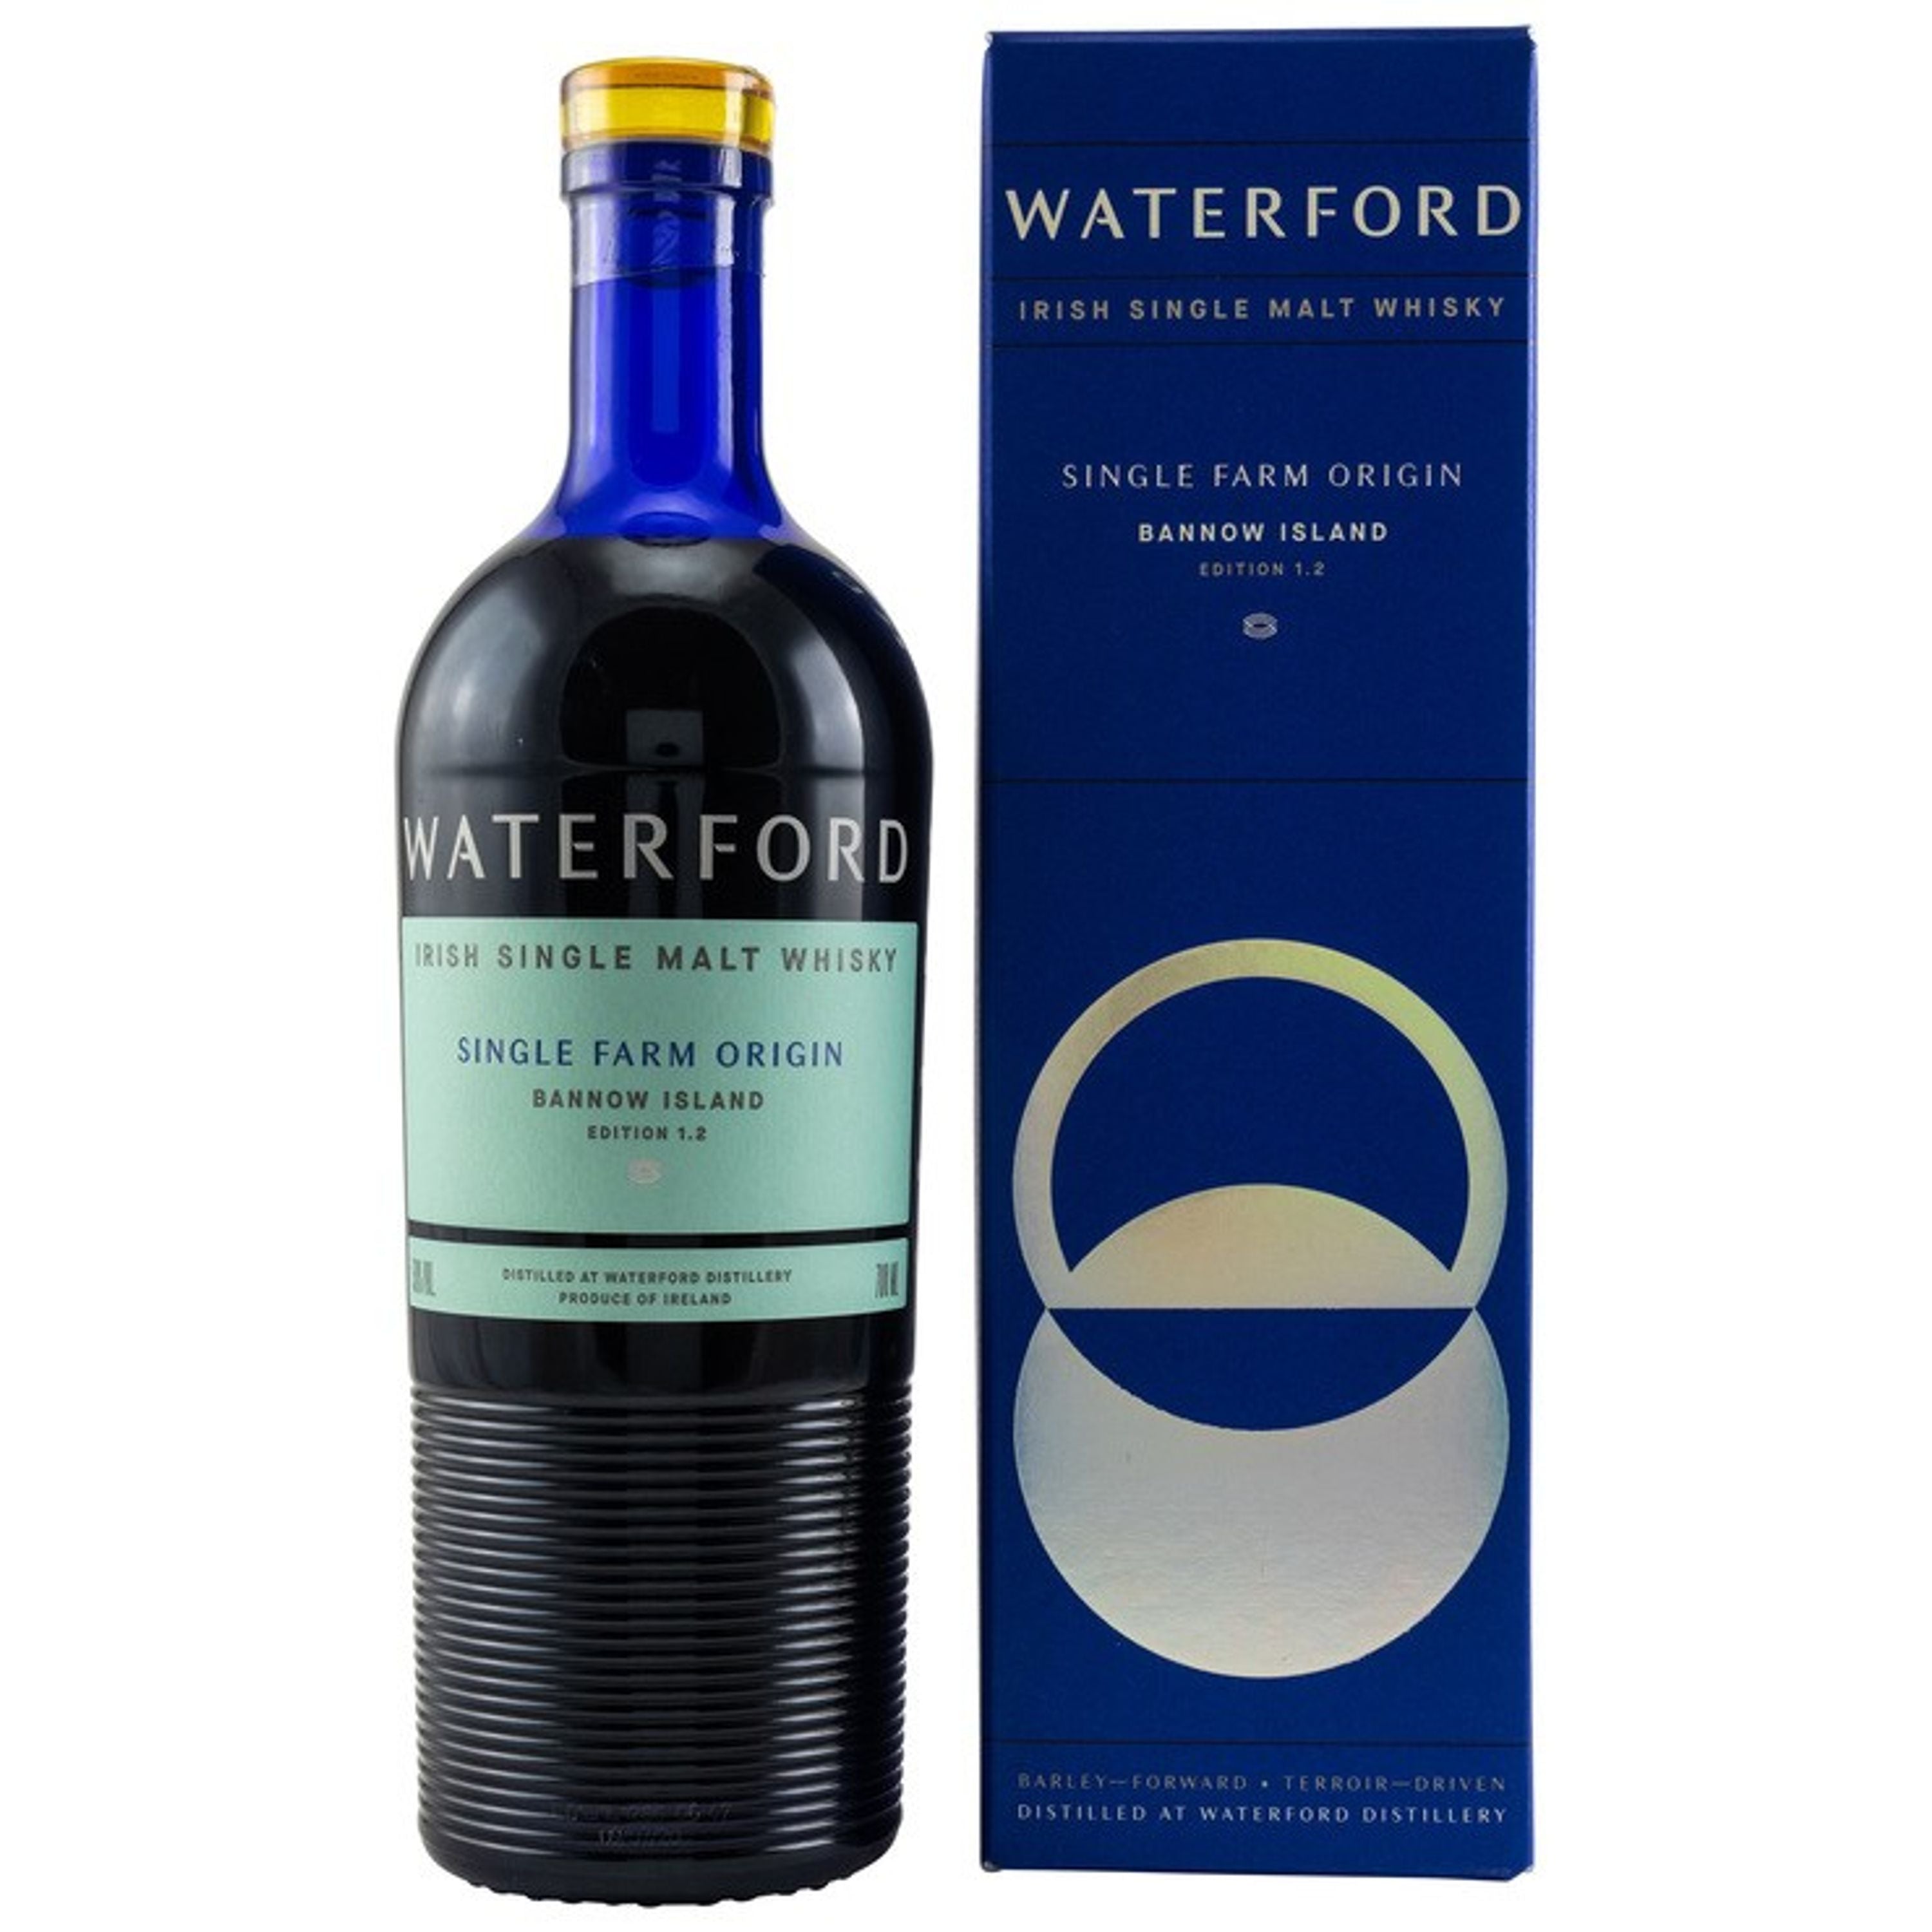 Waterford Bannow Island Edition 1.2 Single Malt Irish Whiskey 0.7l, alc. 50% by volume